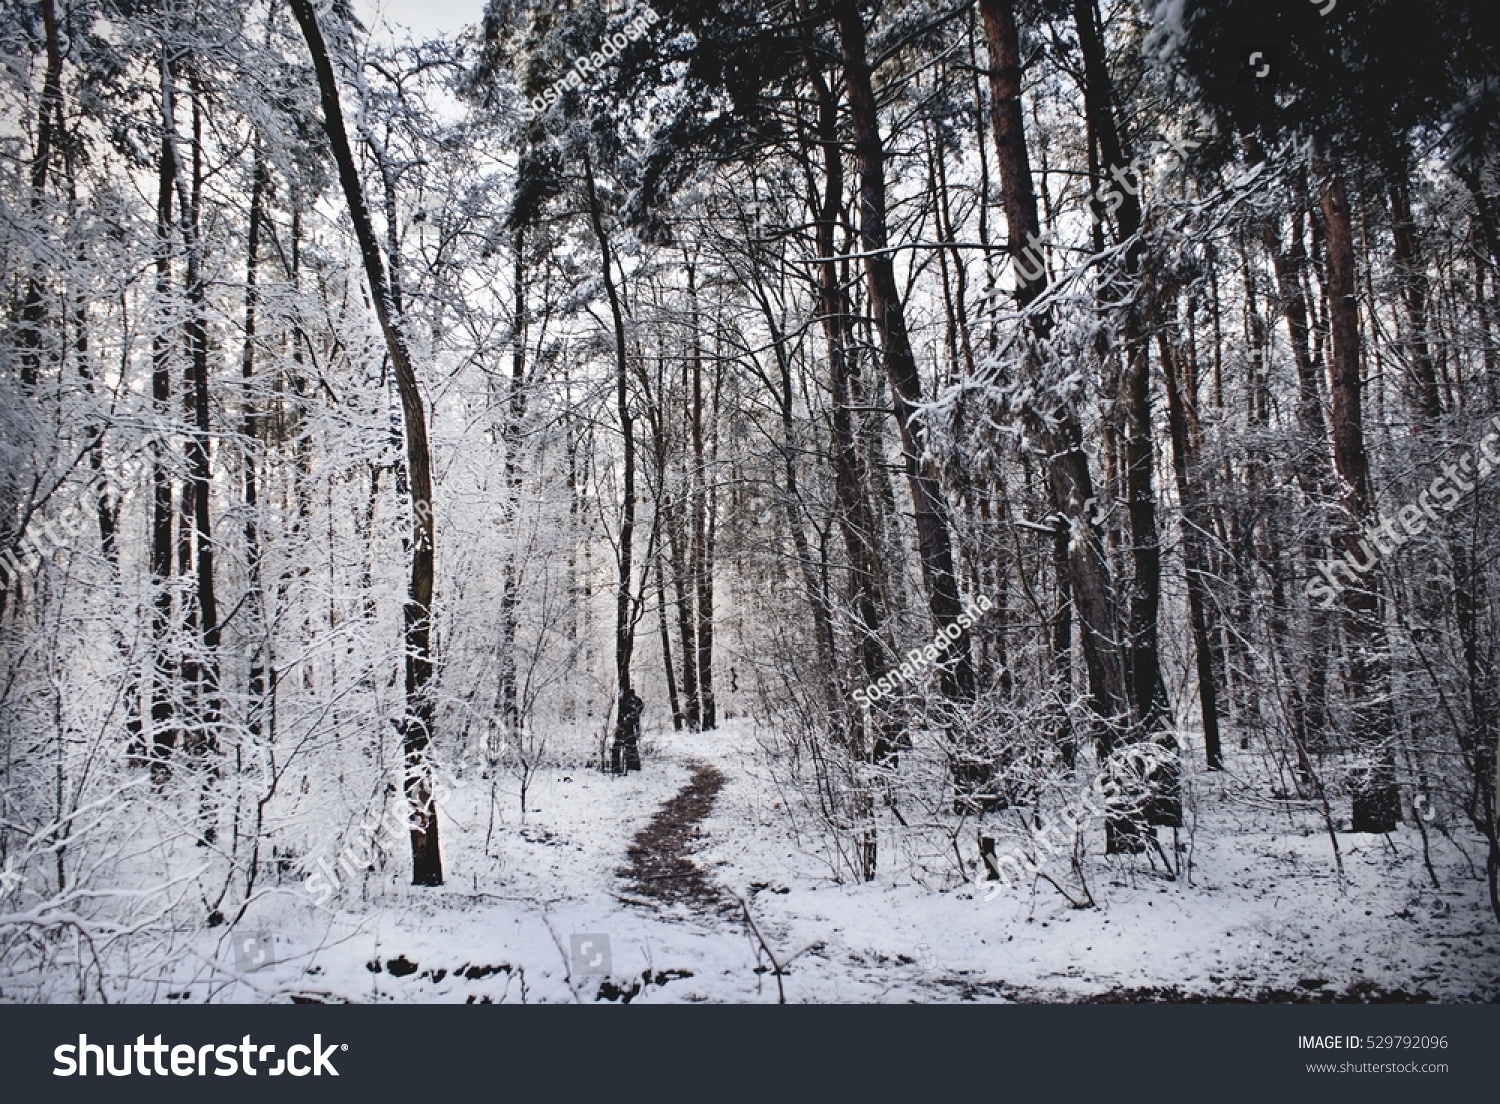 Winter snowing inn forest background #529792096